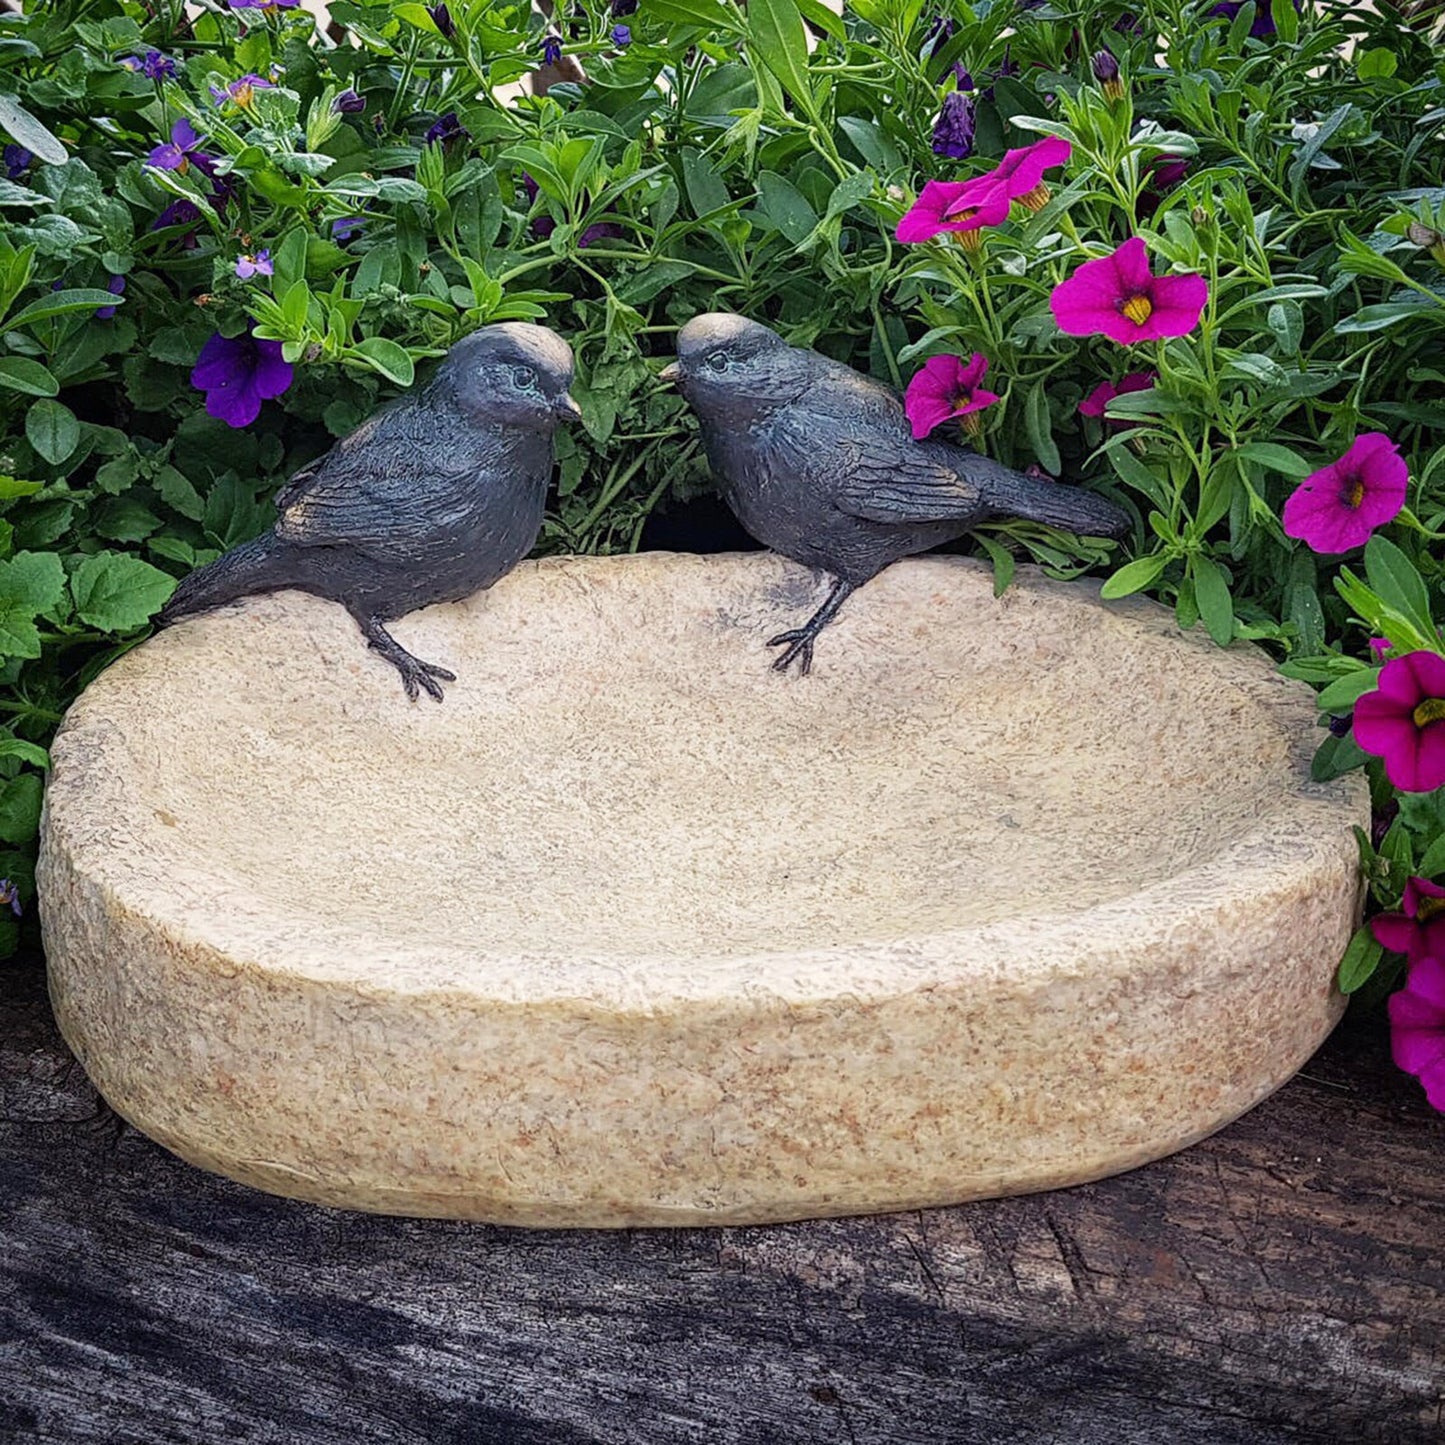 Birds on Bowl Bird Bath Ornament 24cm Resin Feeder Dish Sculpture